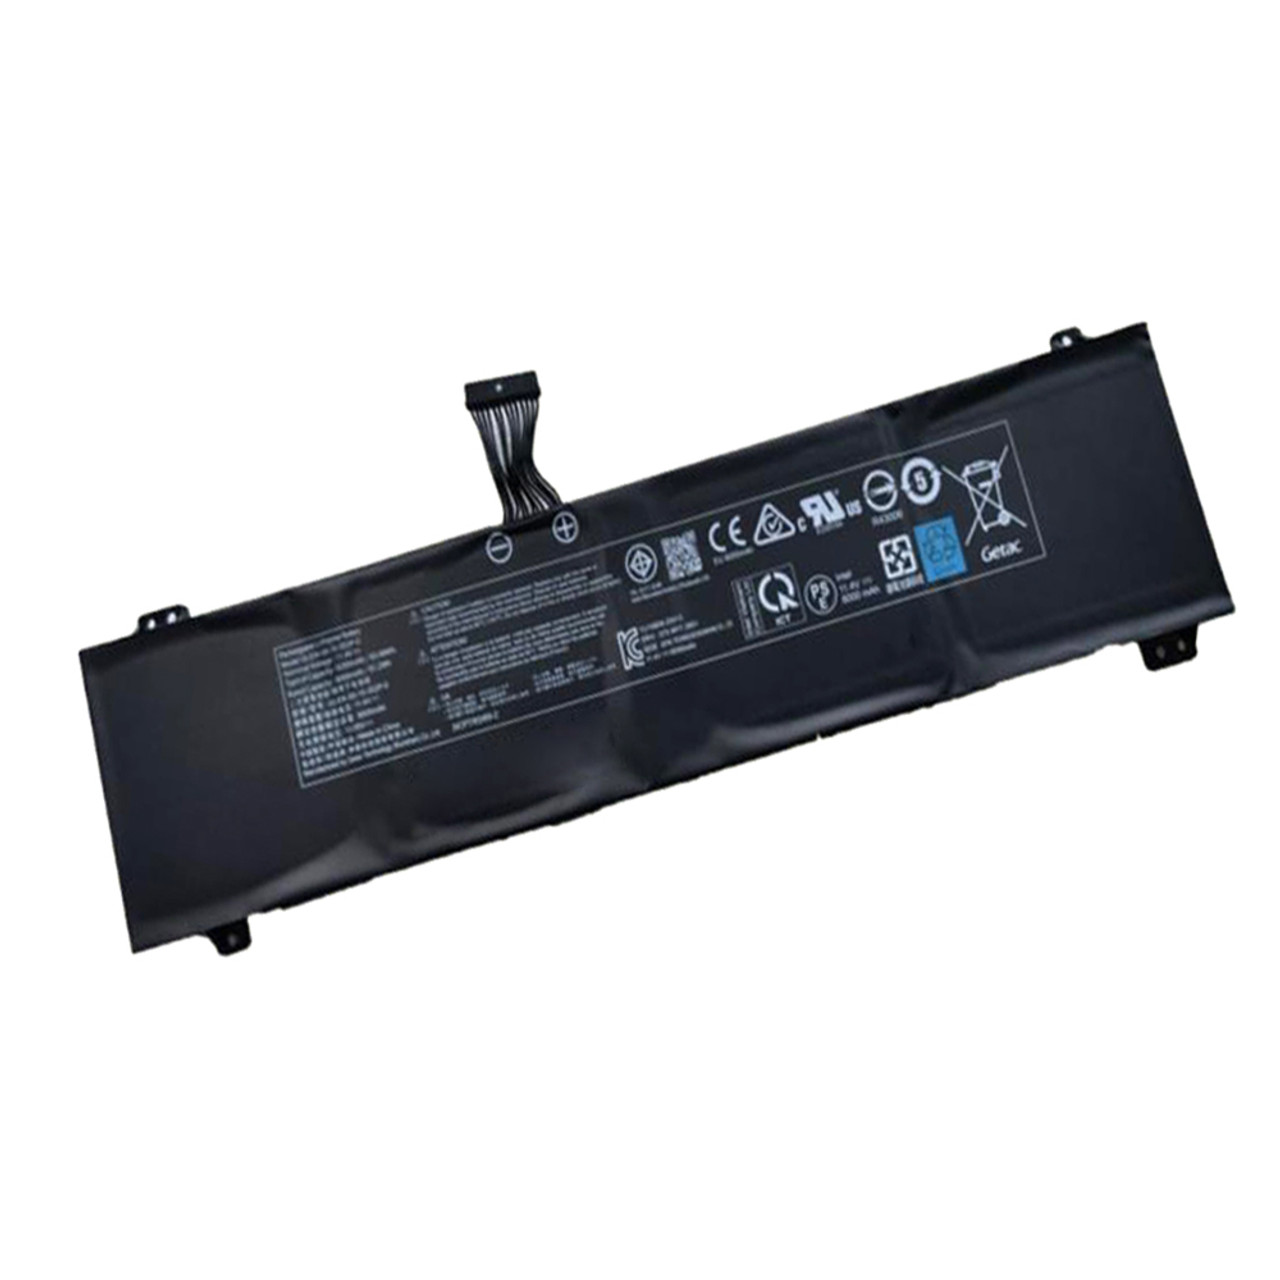 Laptop Battery For Galleria UL7C-R36 UL7C-R37 11.4V 8200MAH 93.48WH New